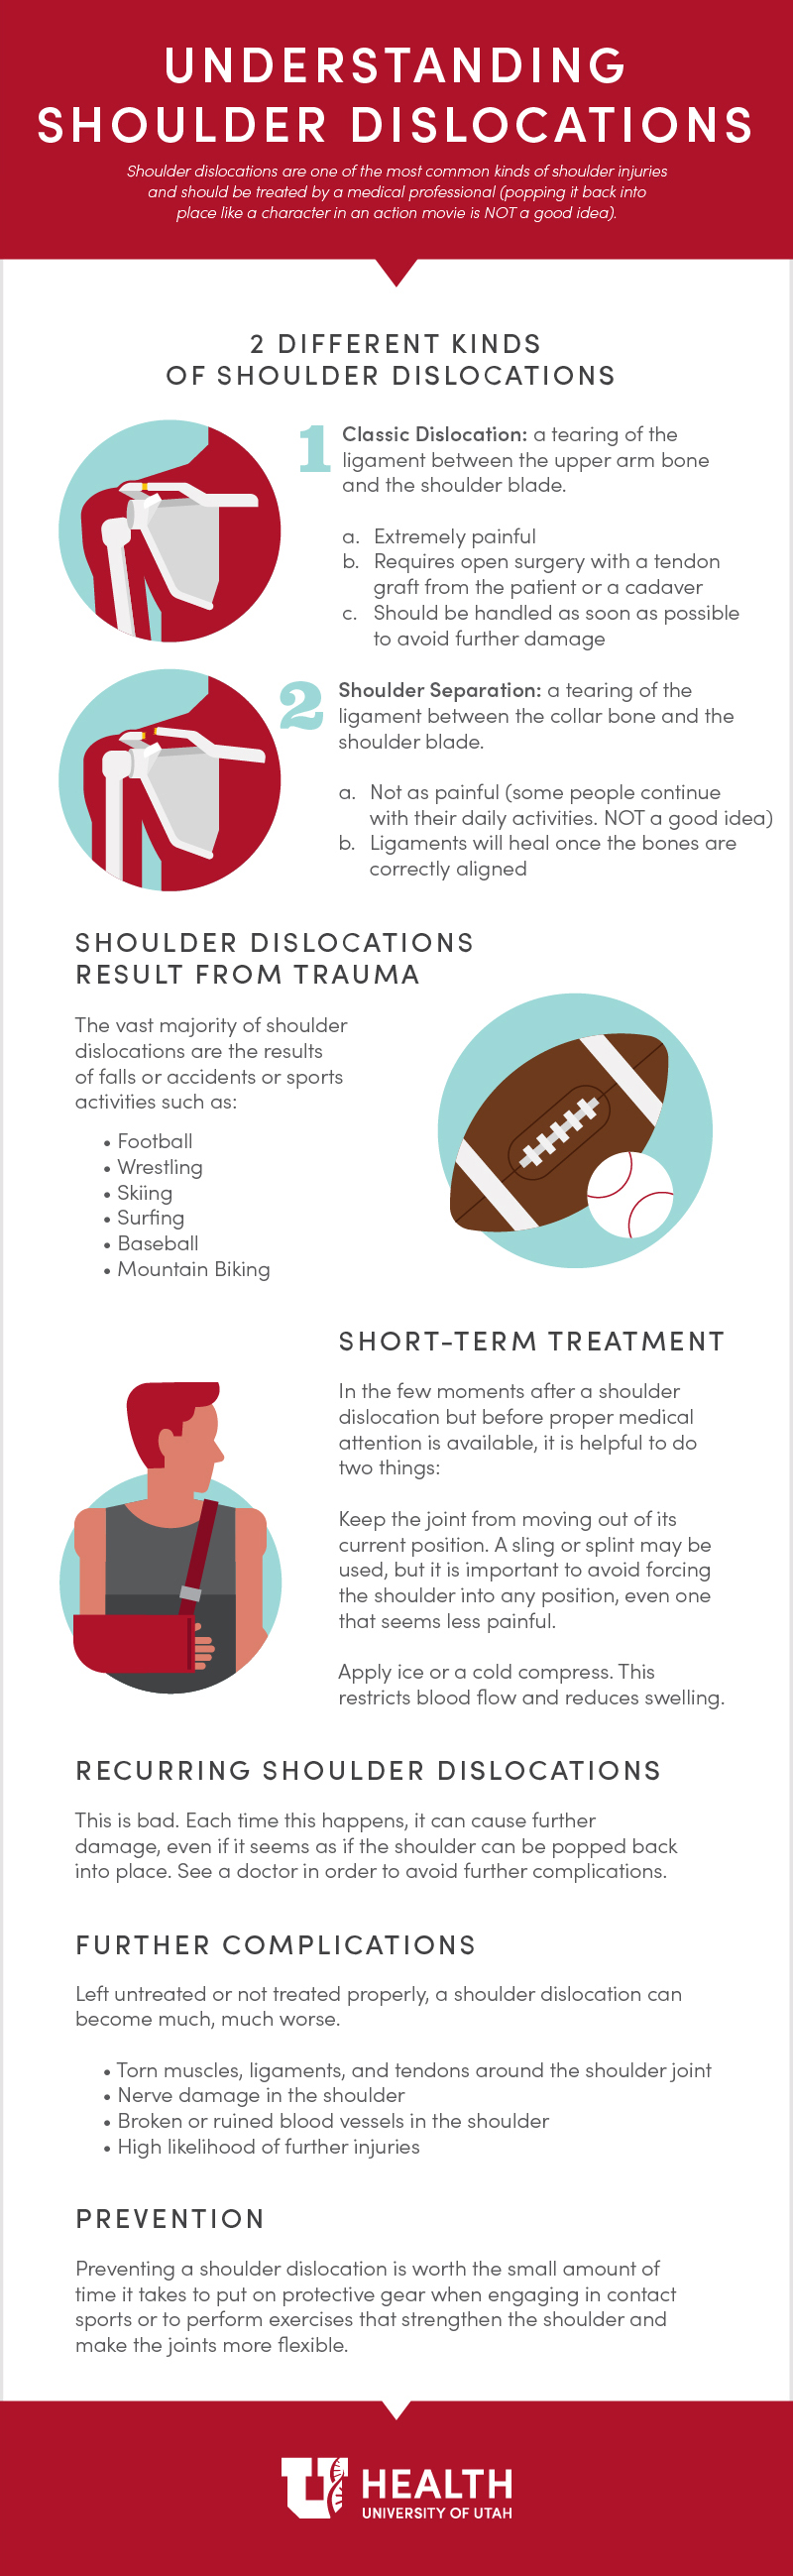 Shoulder dislocation